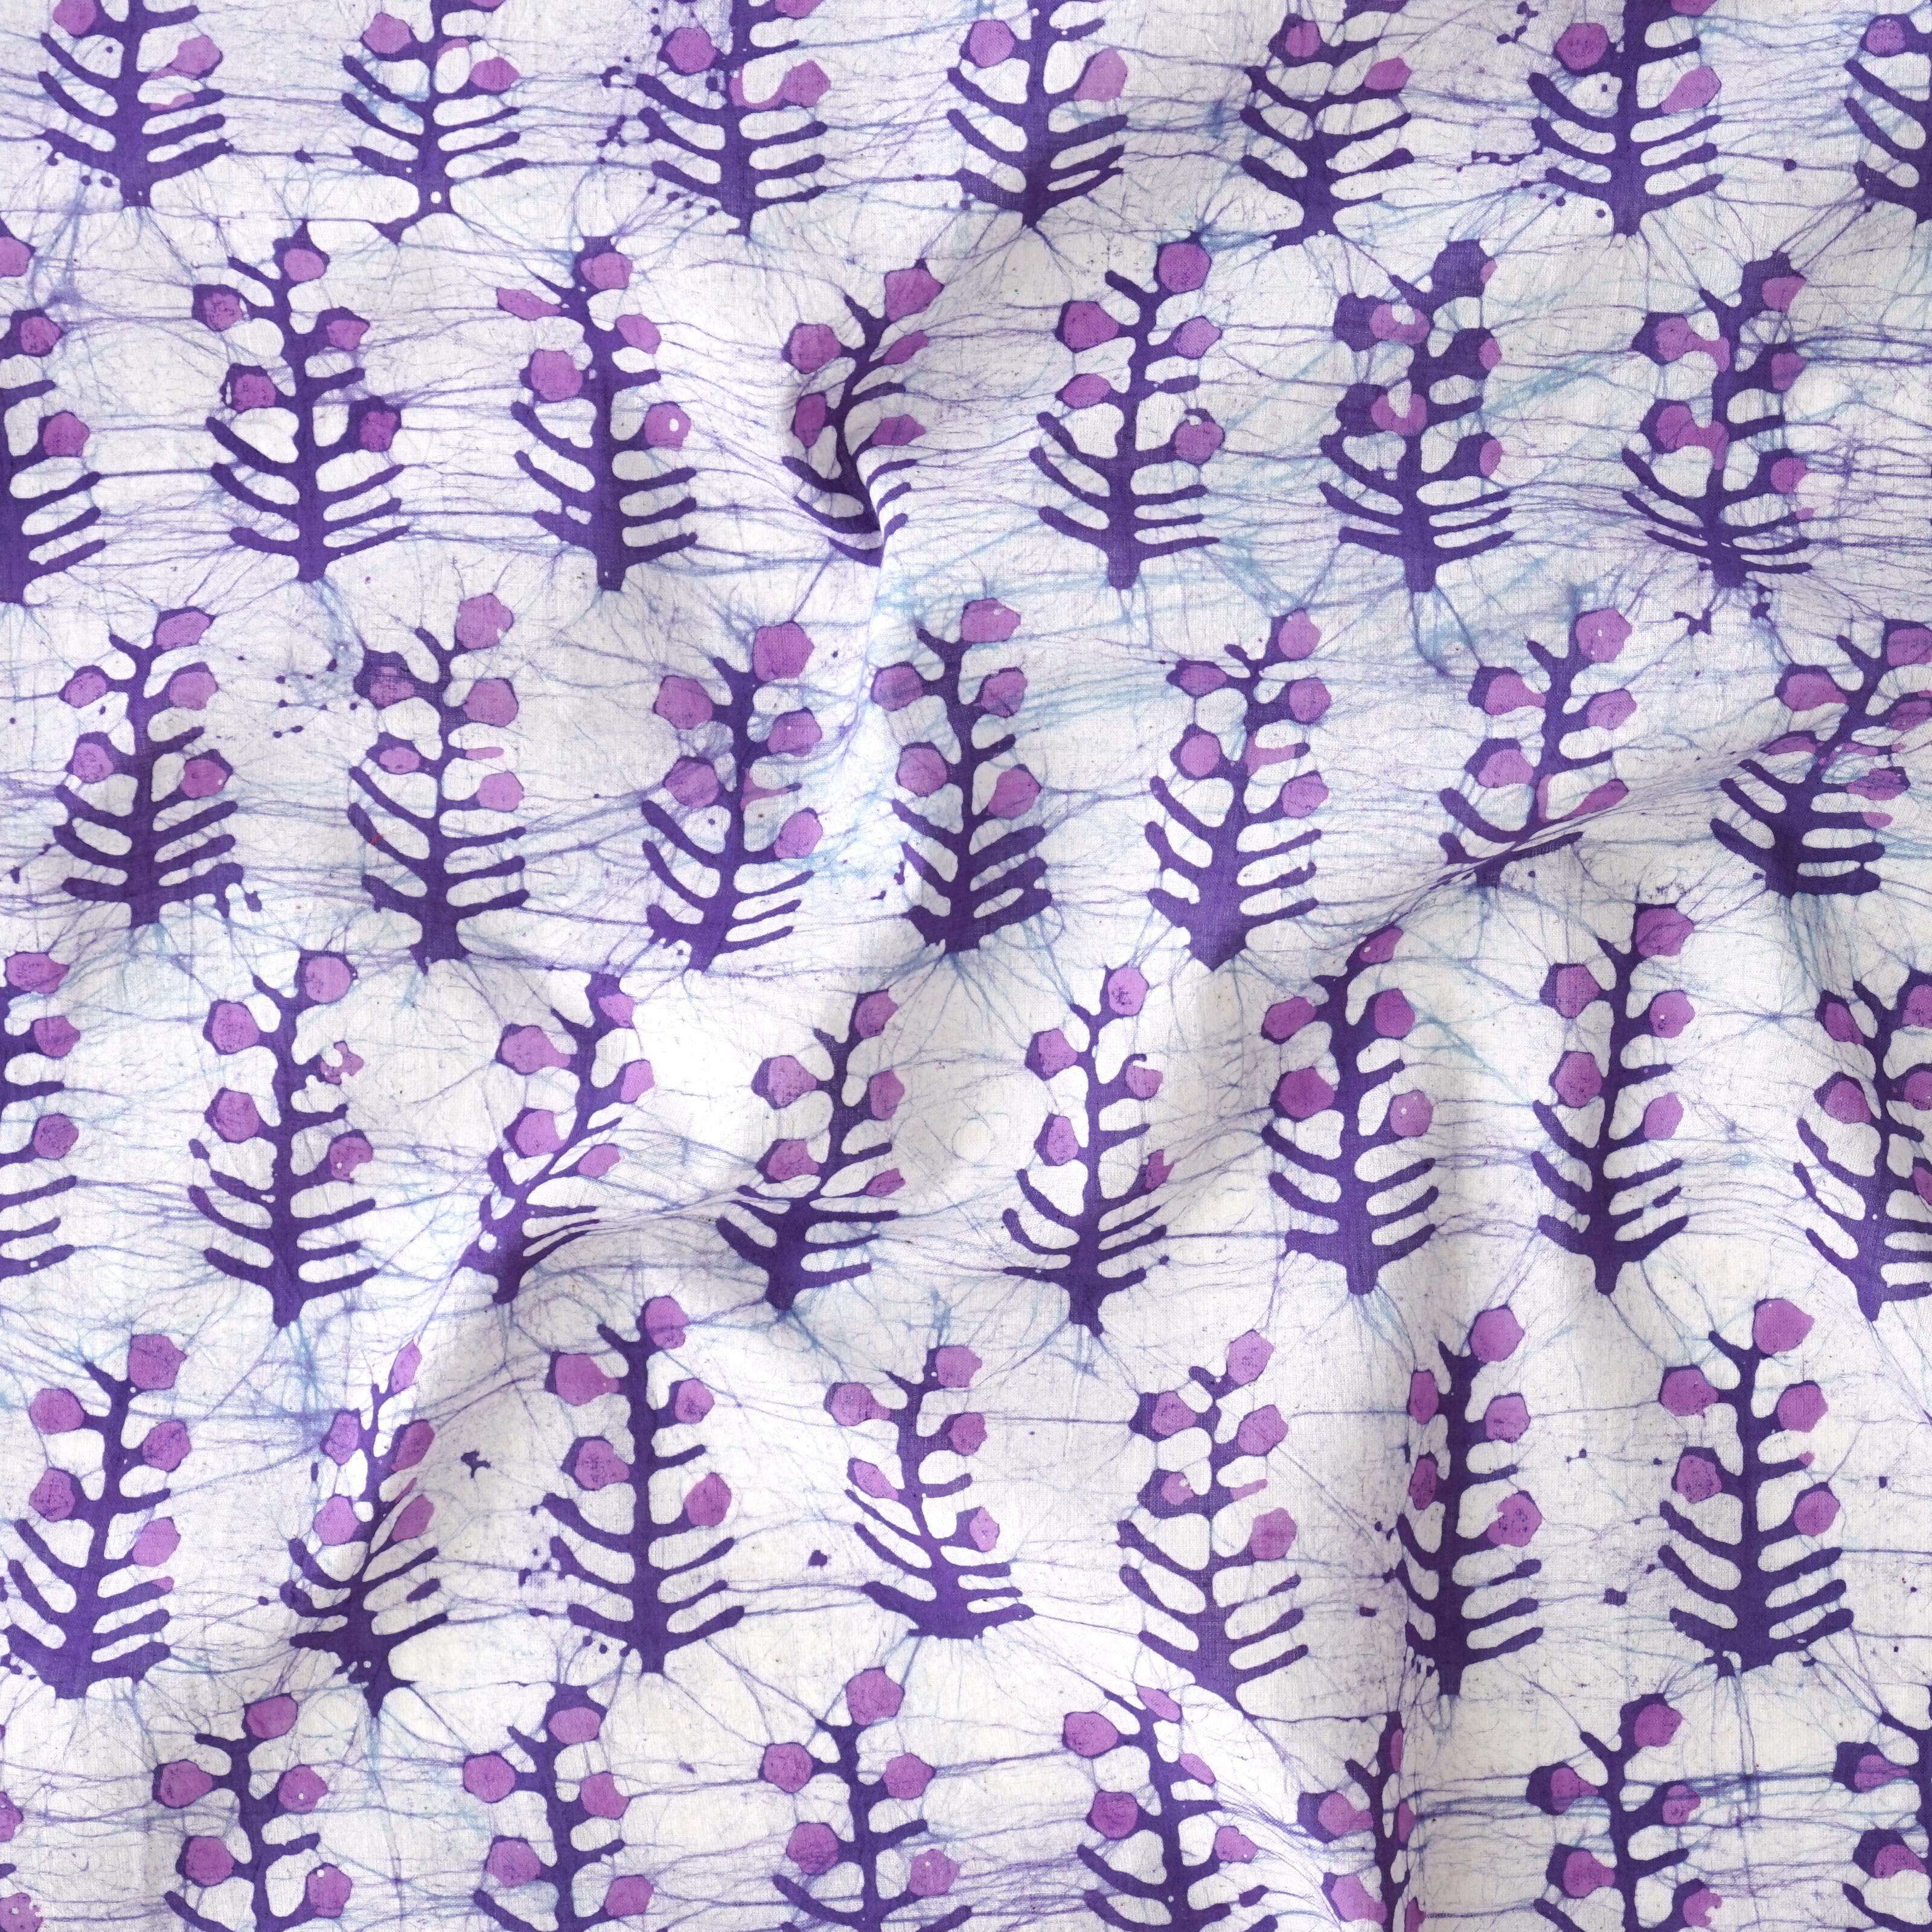 100% Block-Printed Batik Cotton Fabric From India - Purple Reactive Dye - Contrast